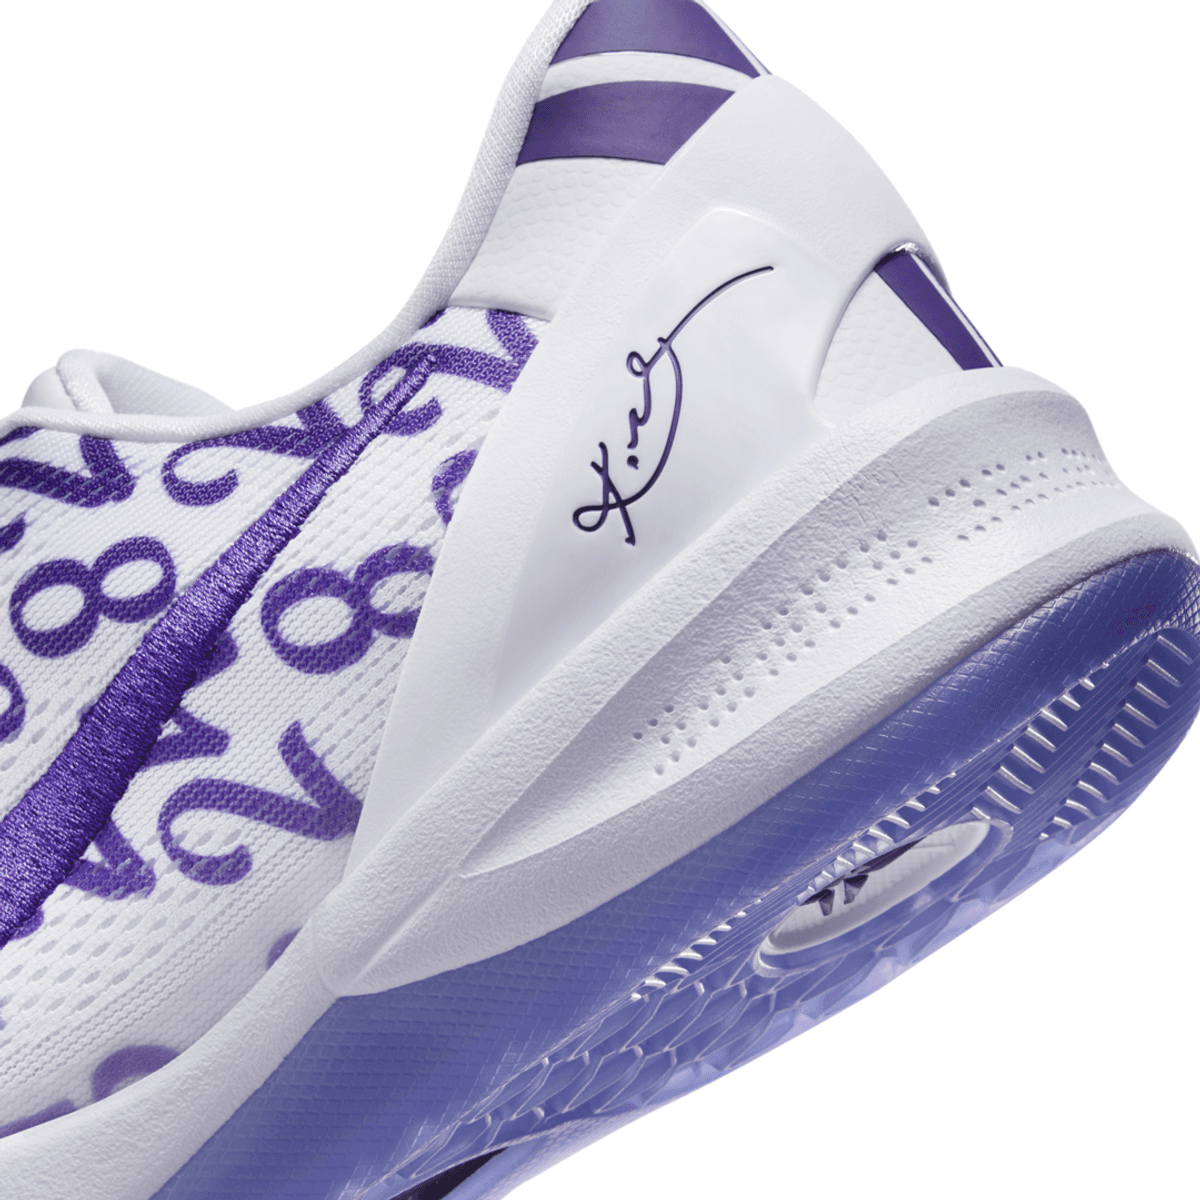 Nike Kobe 8 Protro Court Purple